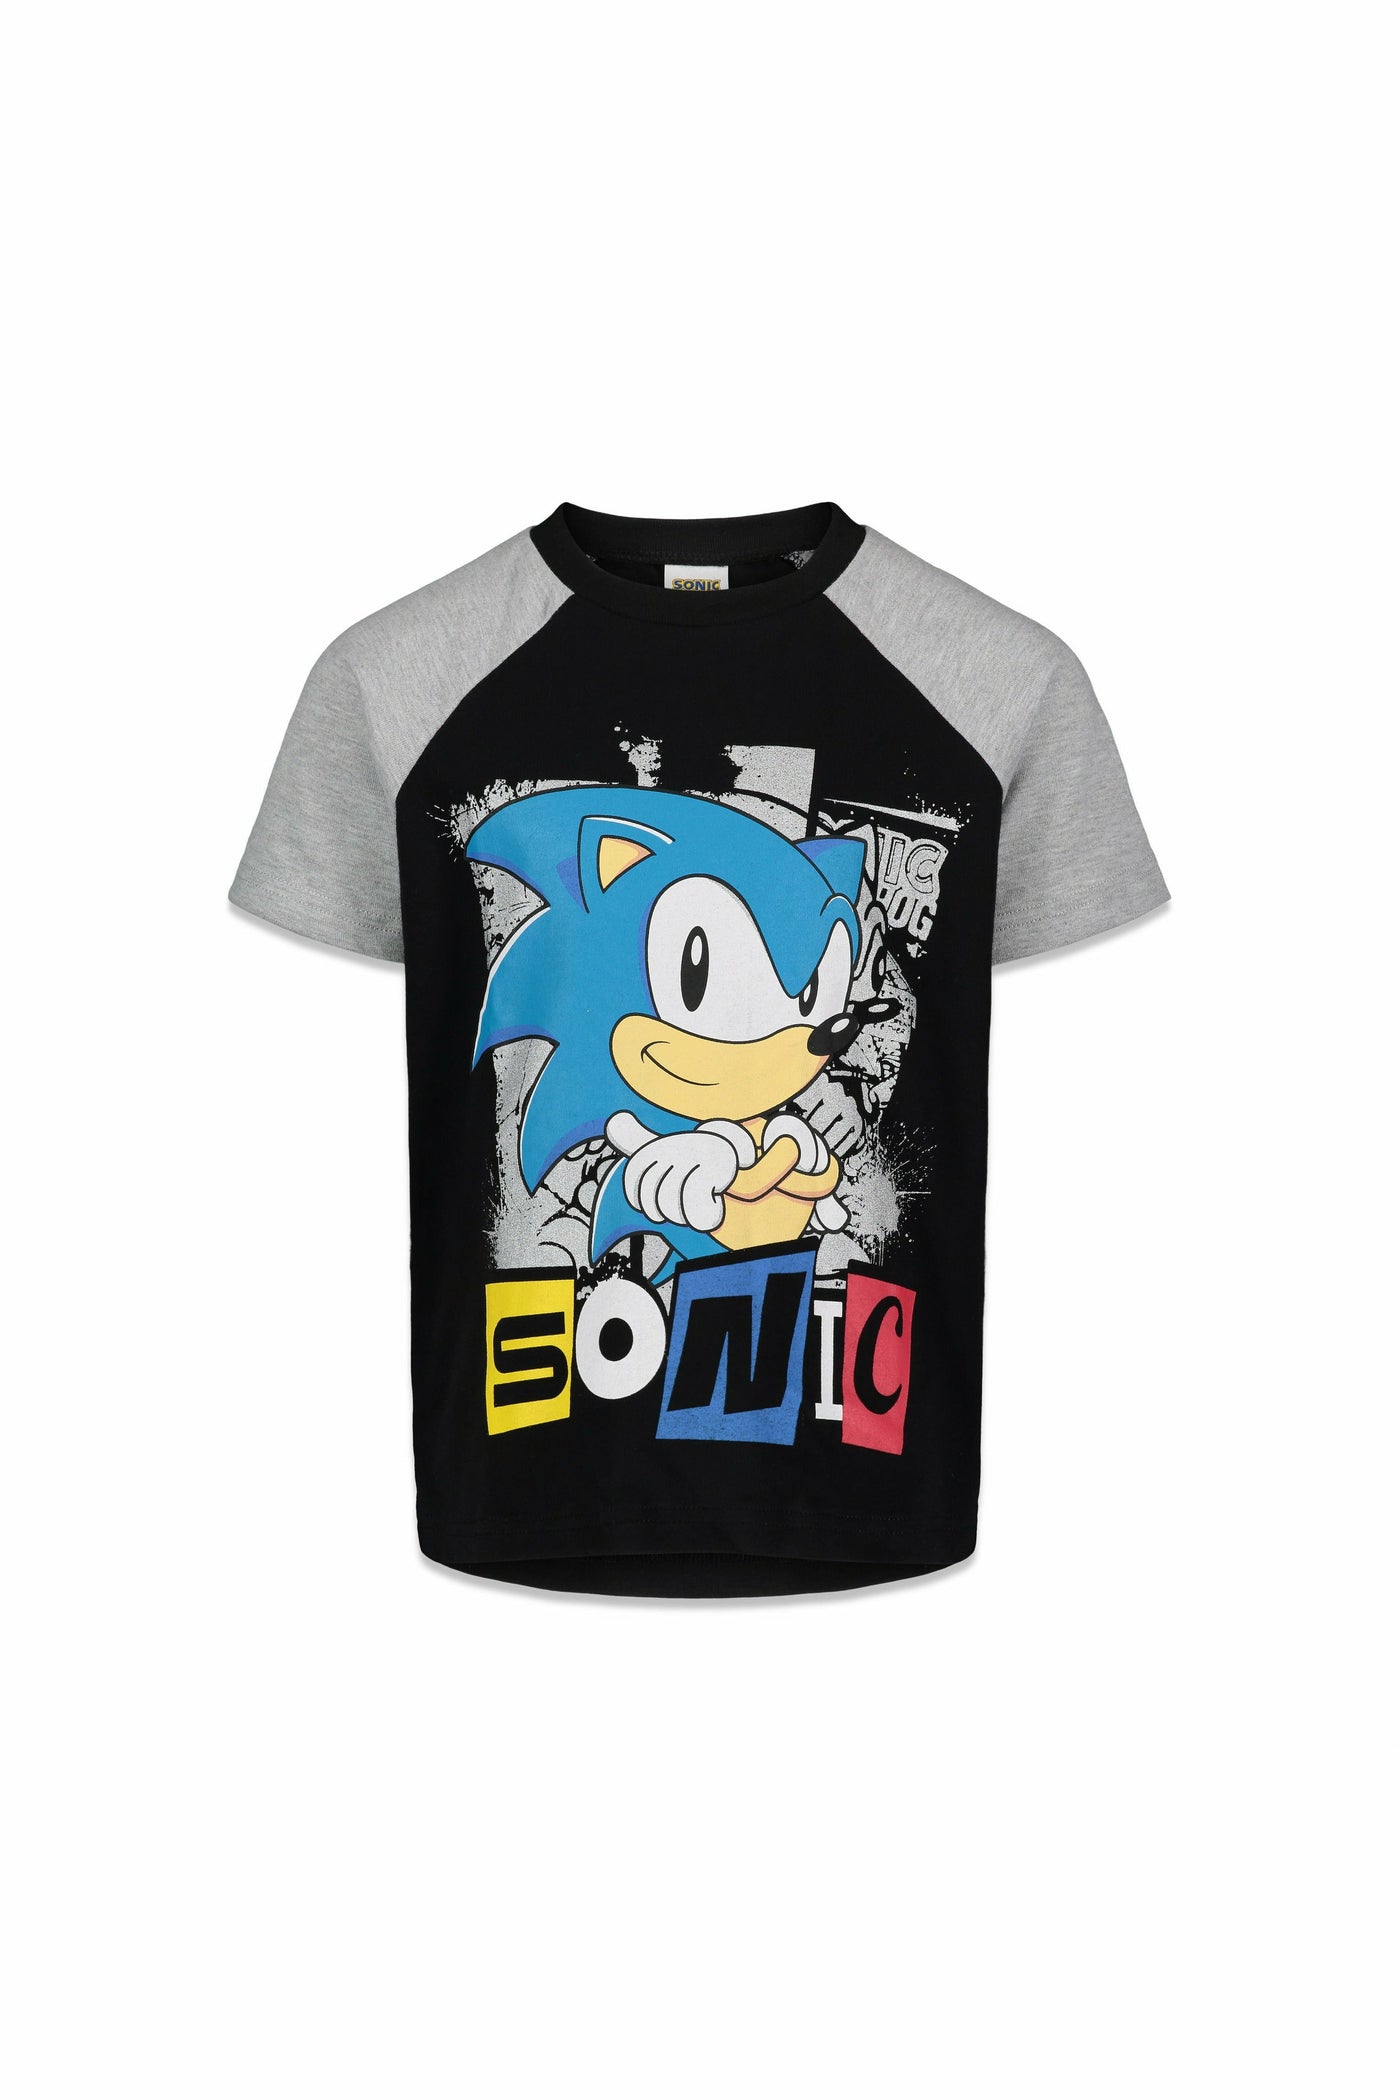 Sonic The Hedgehog 2 Pack Raglan Graphic T-Shirt